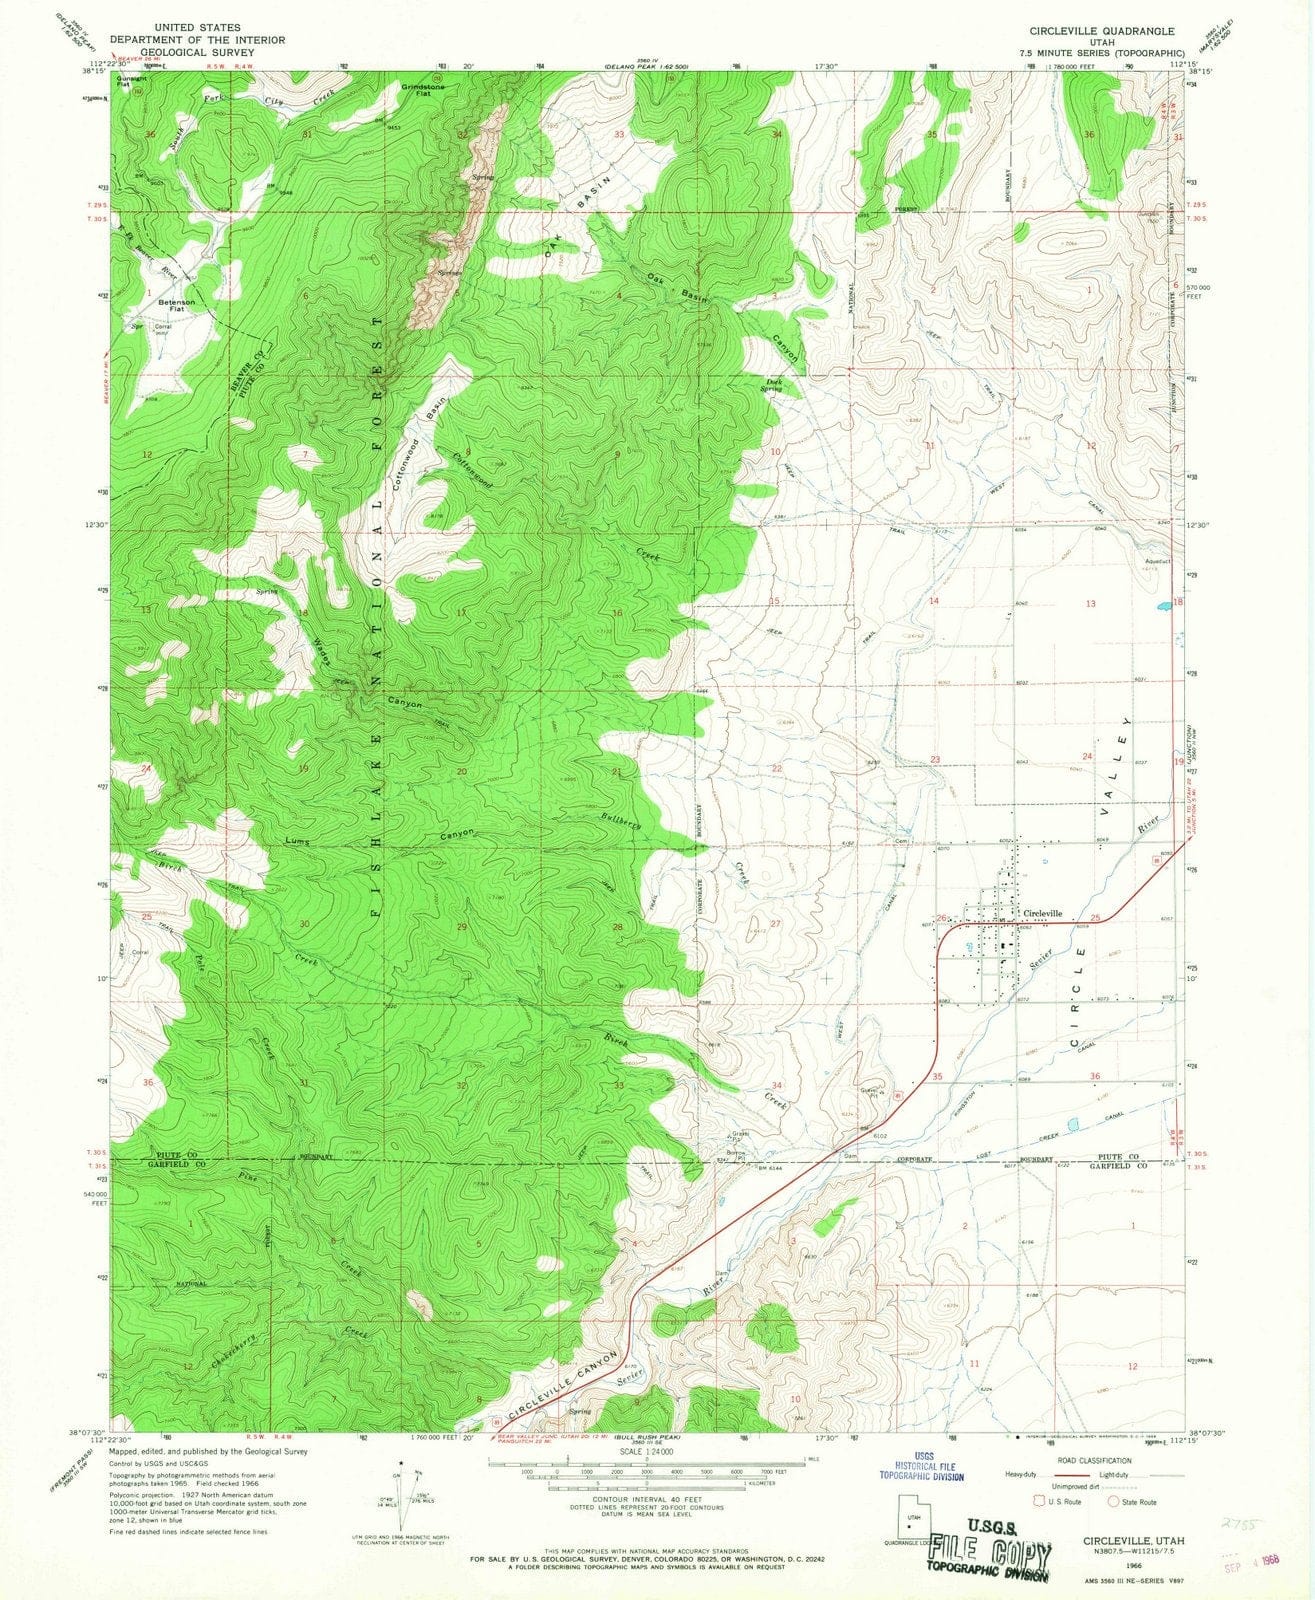 1966 Circleville, UT - Utah - USGS Topographic Map